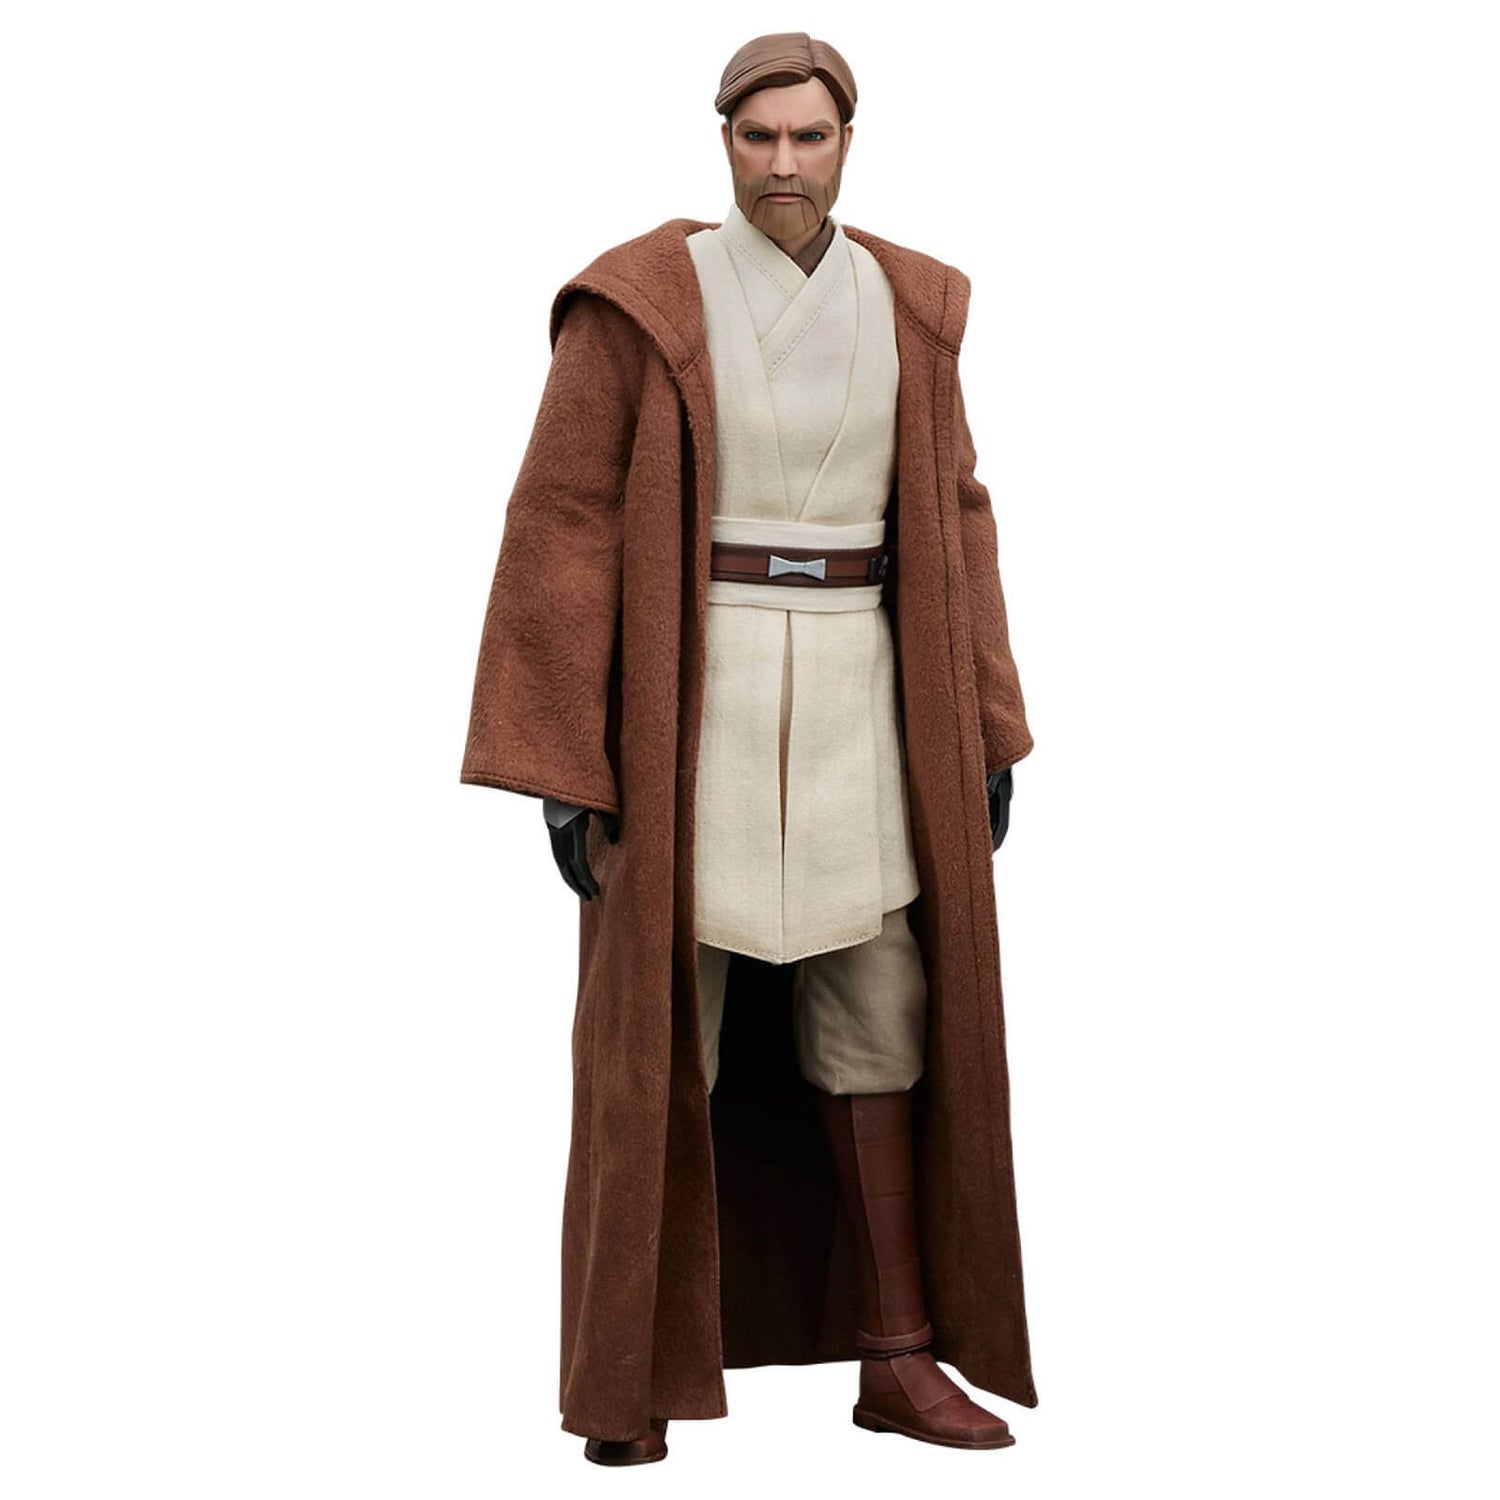 Sideshow Star Wars The Clone Wars Action Figure 1/6 Obi-Wan Kenobi 30 cm